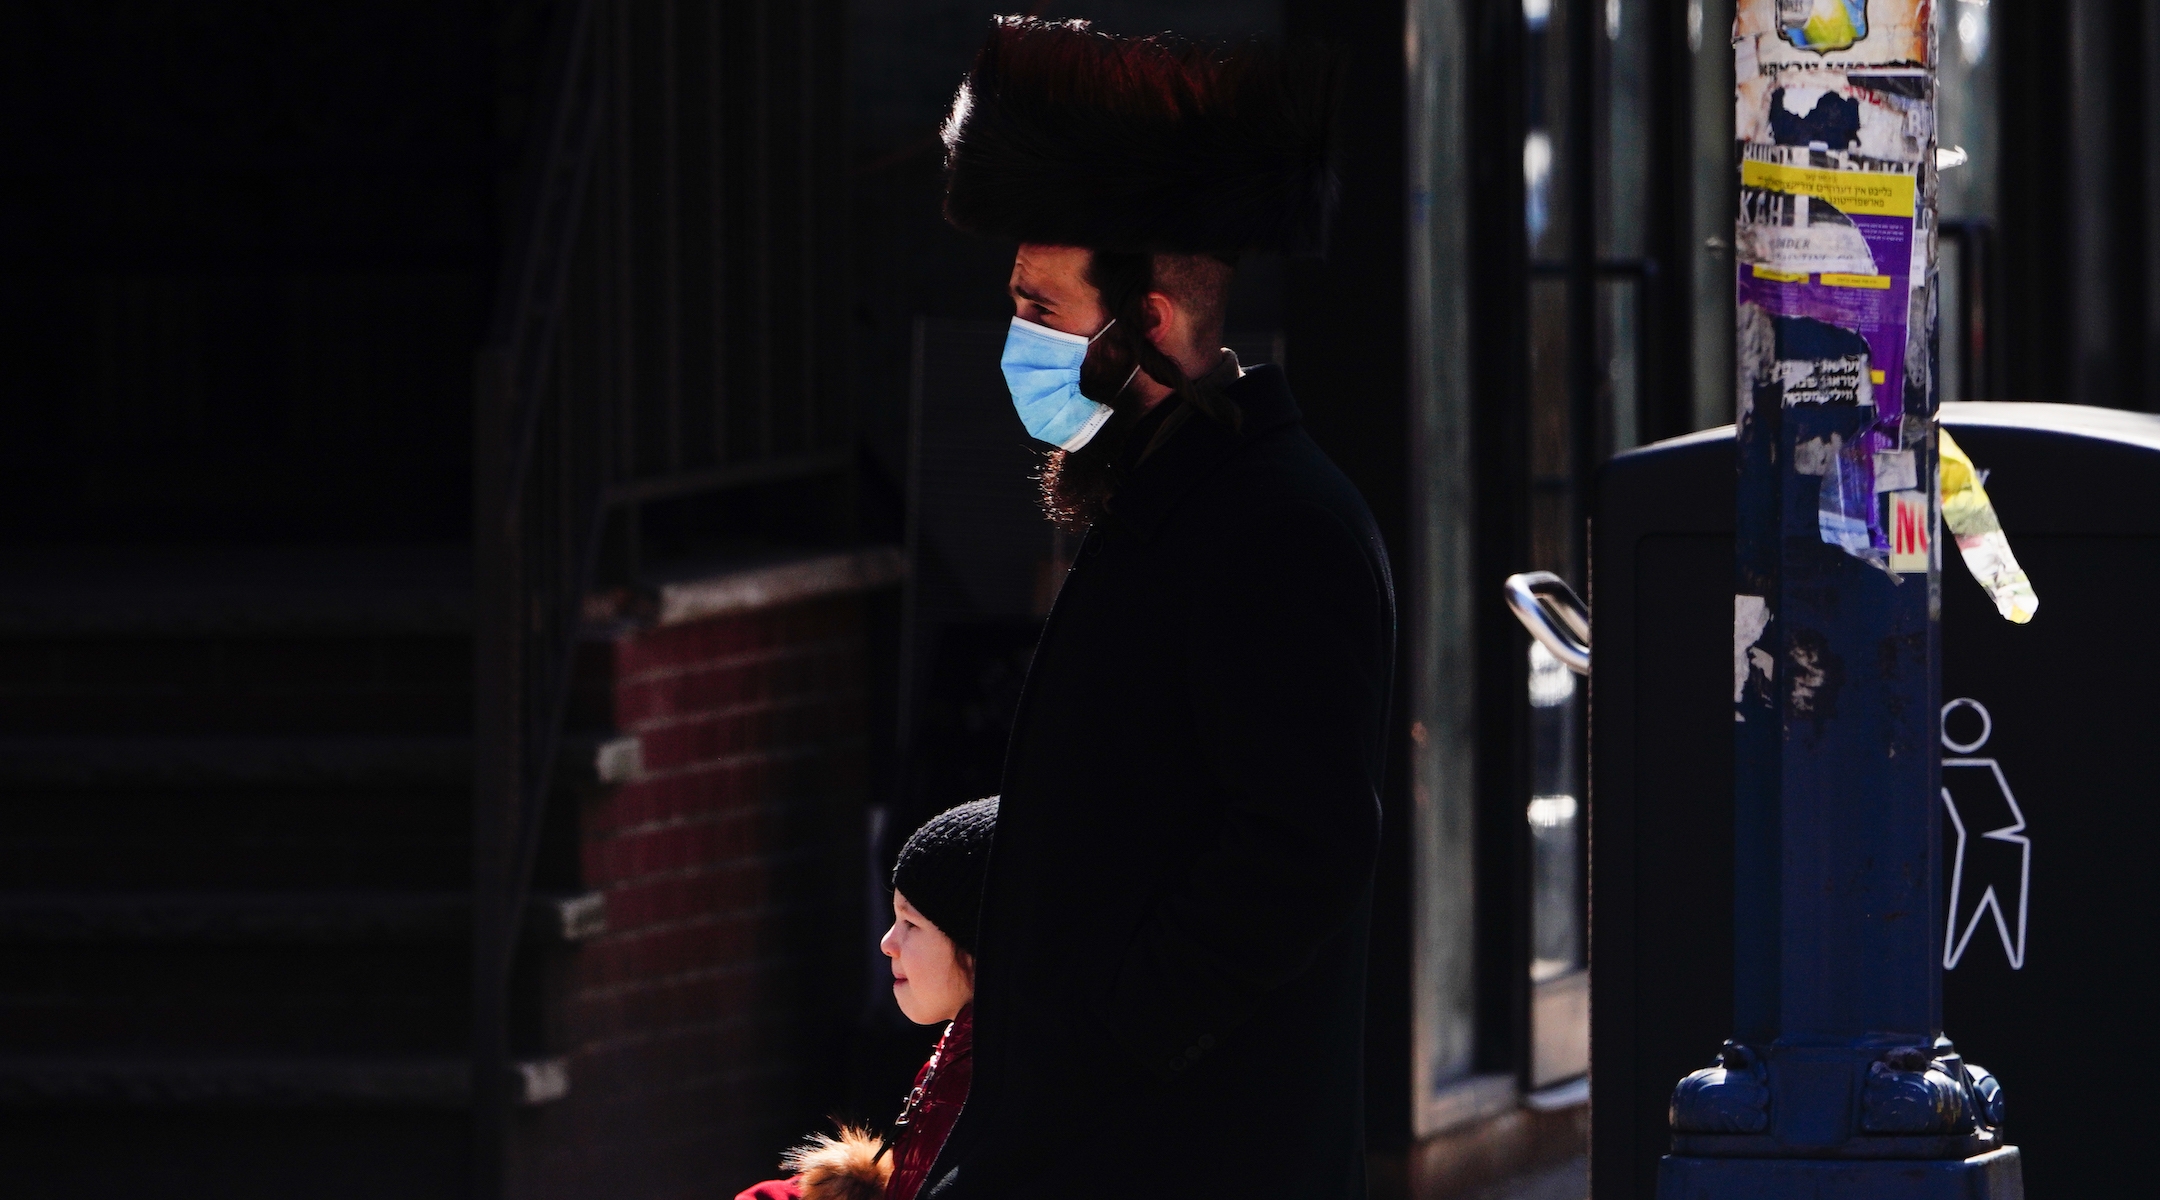 Orthodox Jews walking on the street in Williamsburg on April 11, 2020. (John Nacion/NurPhoto via Getty Images)